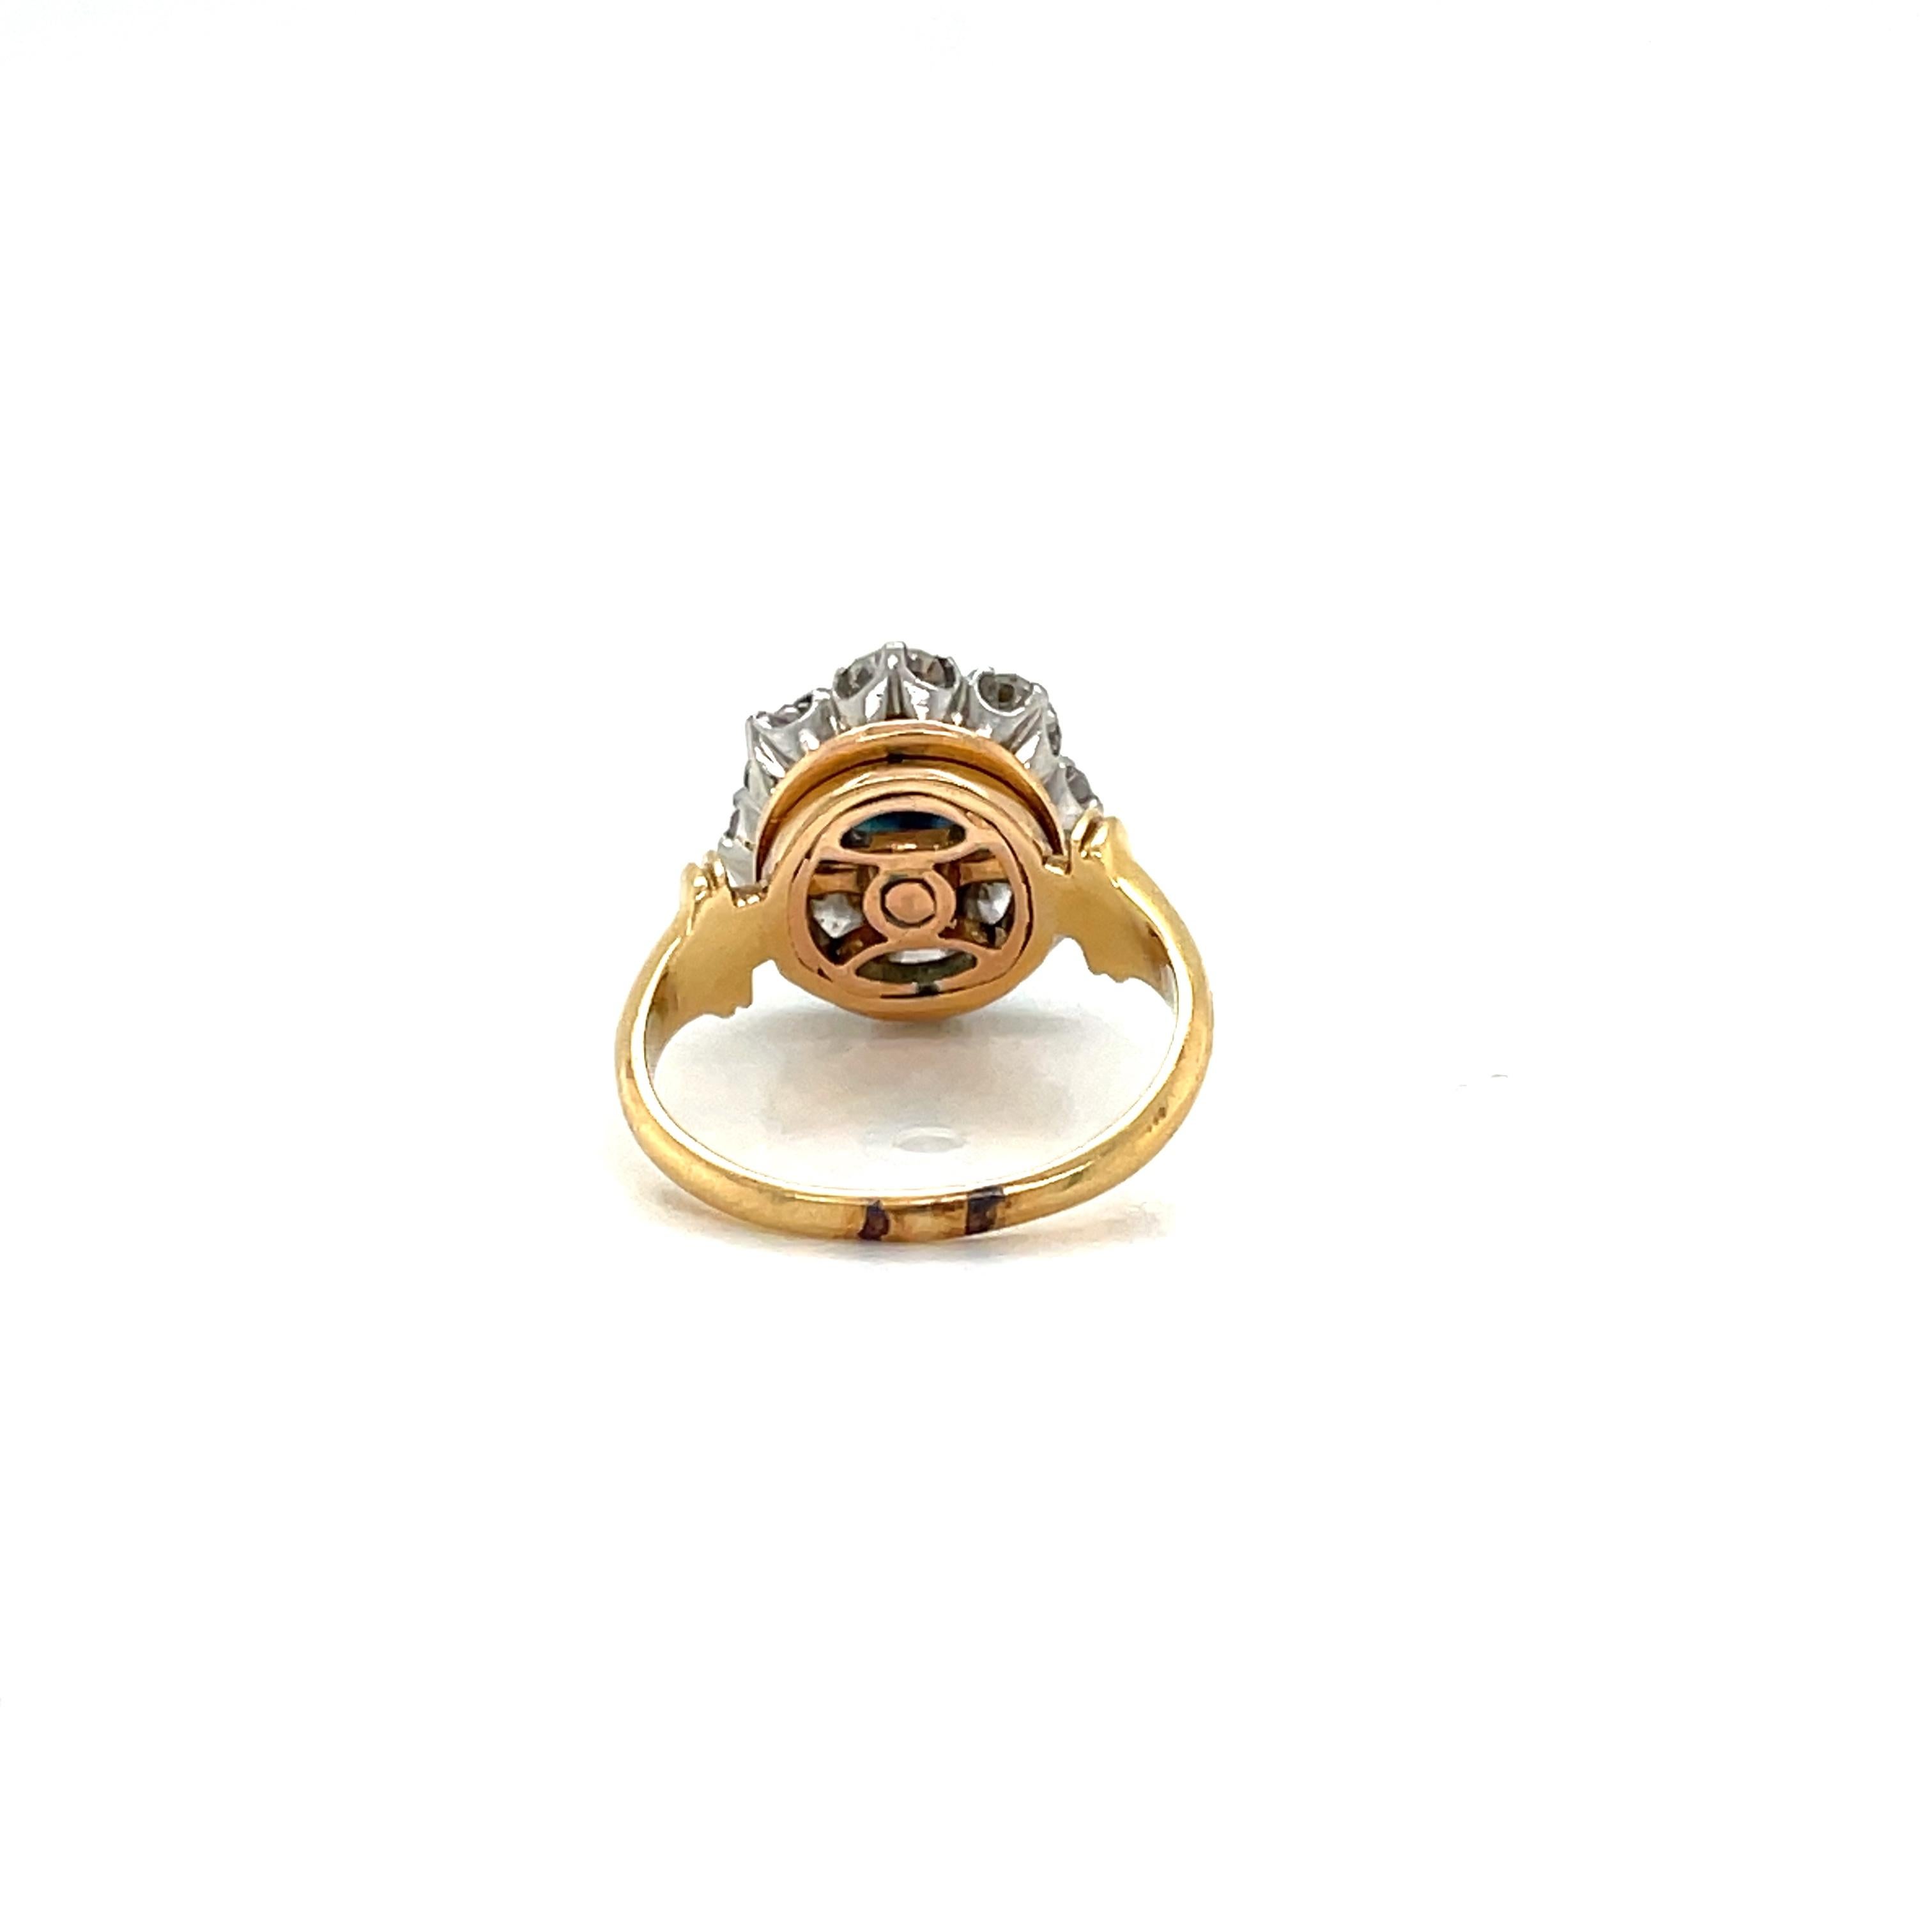 Women's Antique Sapphire Diamond Cluster Ring